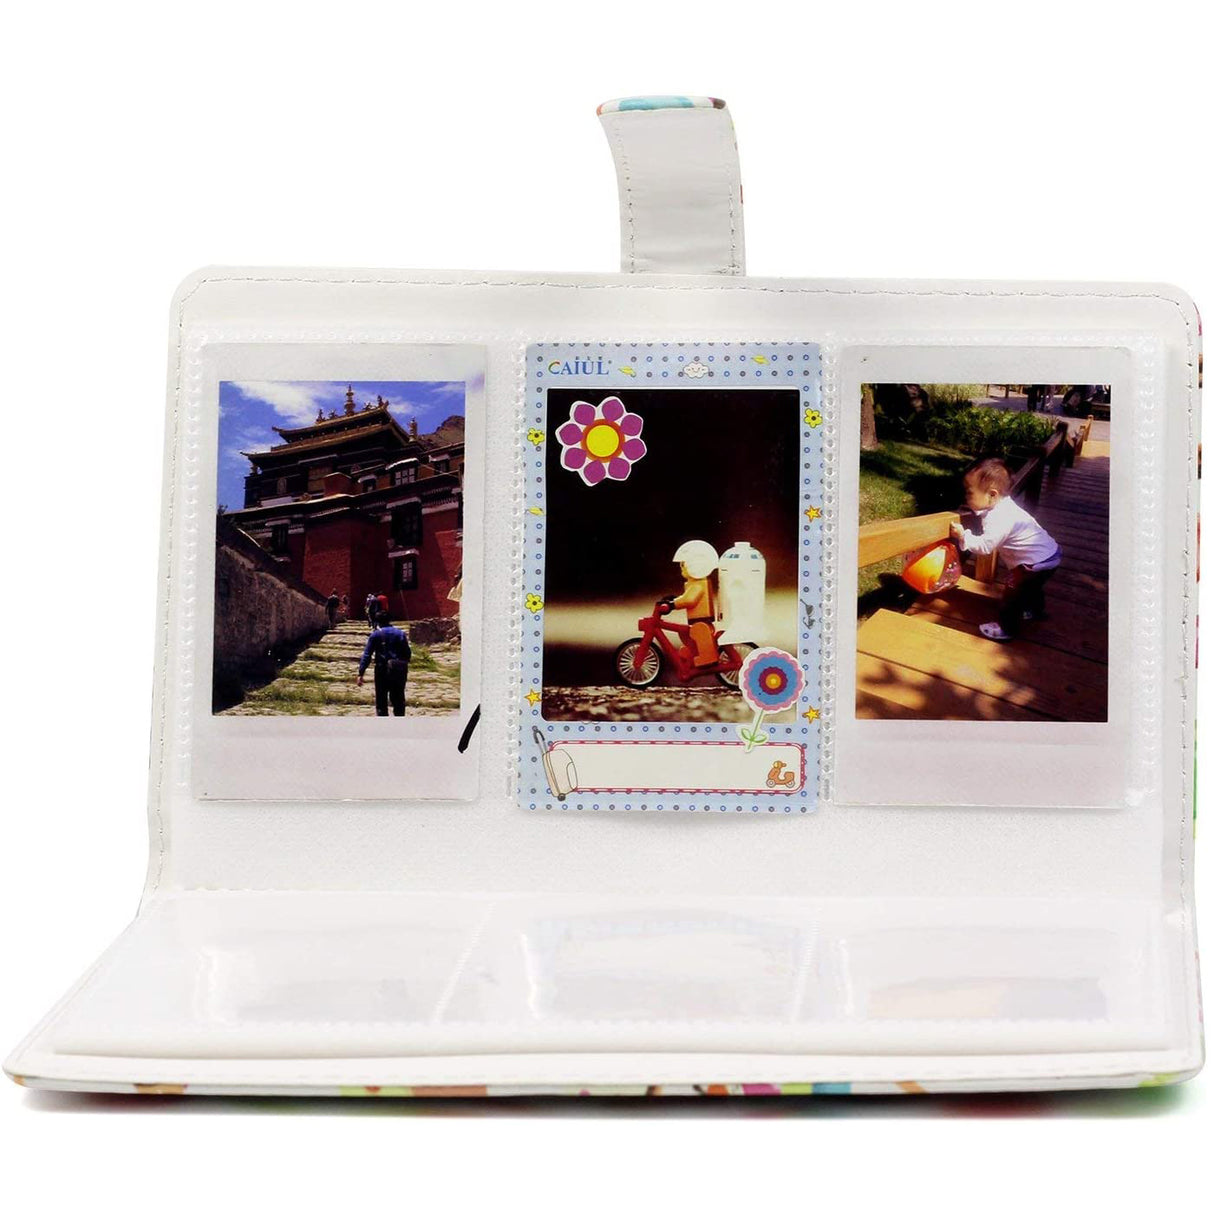 Fujifilm Instax Mini 5 Pack 10 Sheets Instant Film with 96-sheet Album for mini film